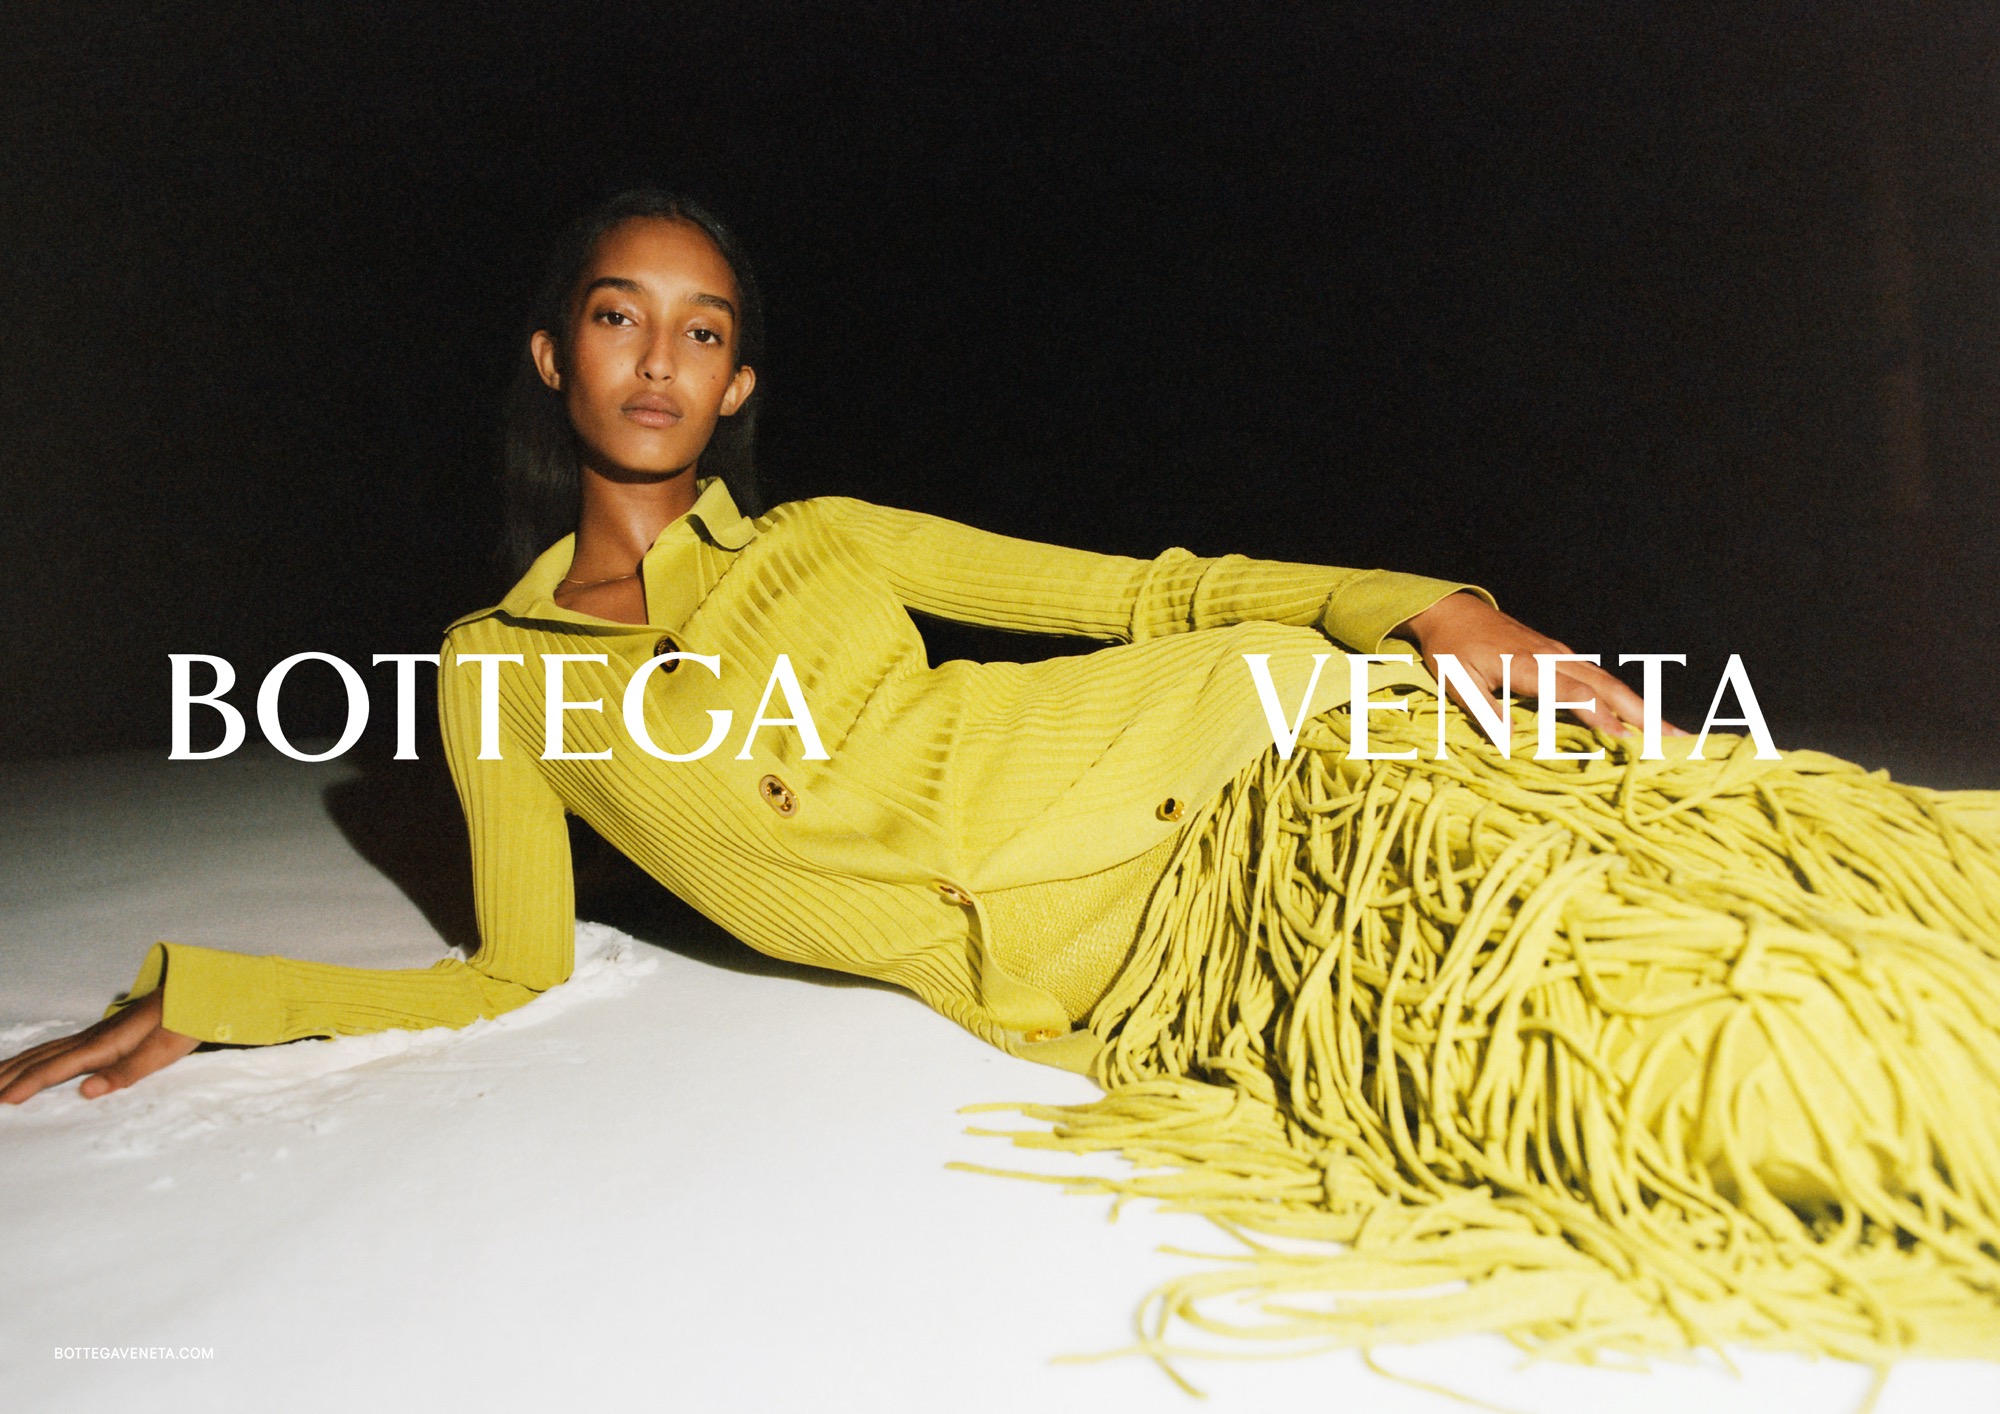 We look back at Daniel Lee's most iconic pieces for Bottega Veneta